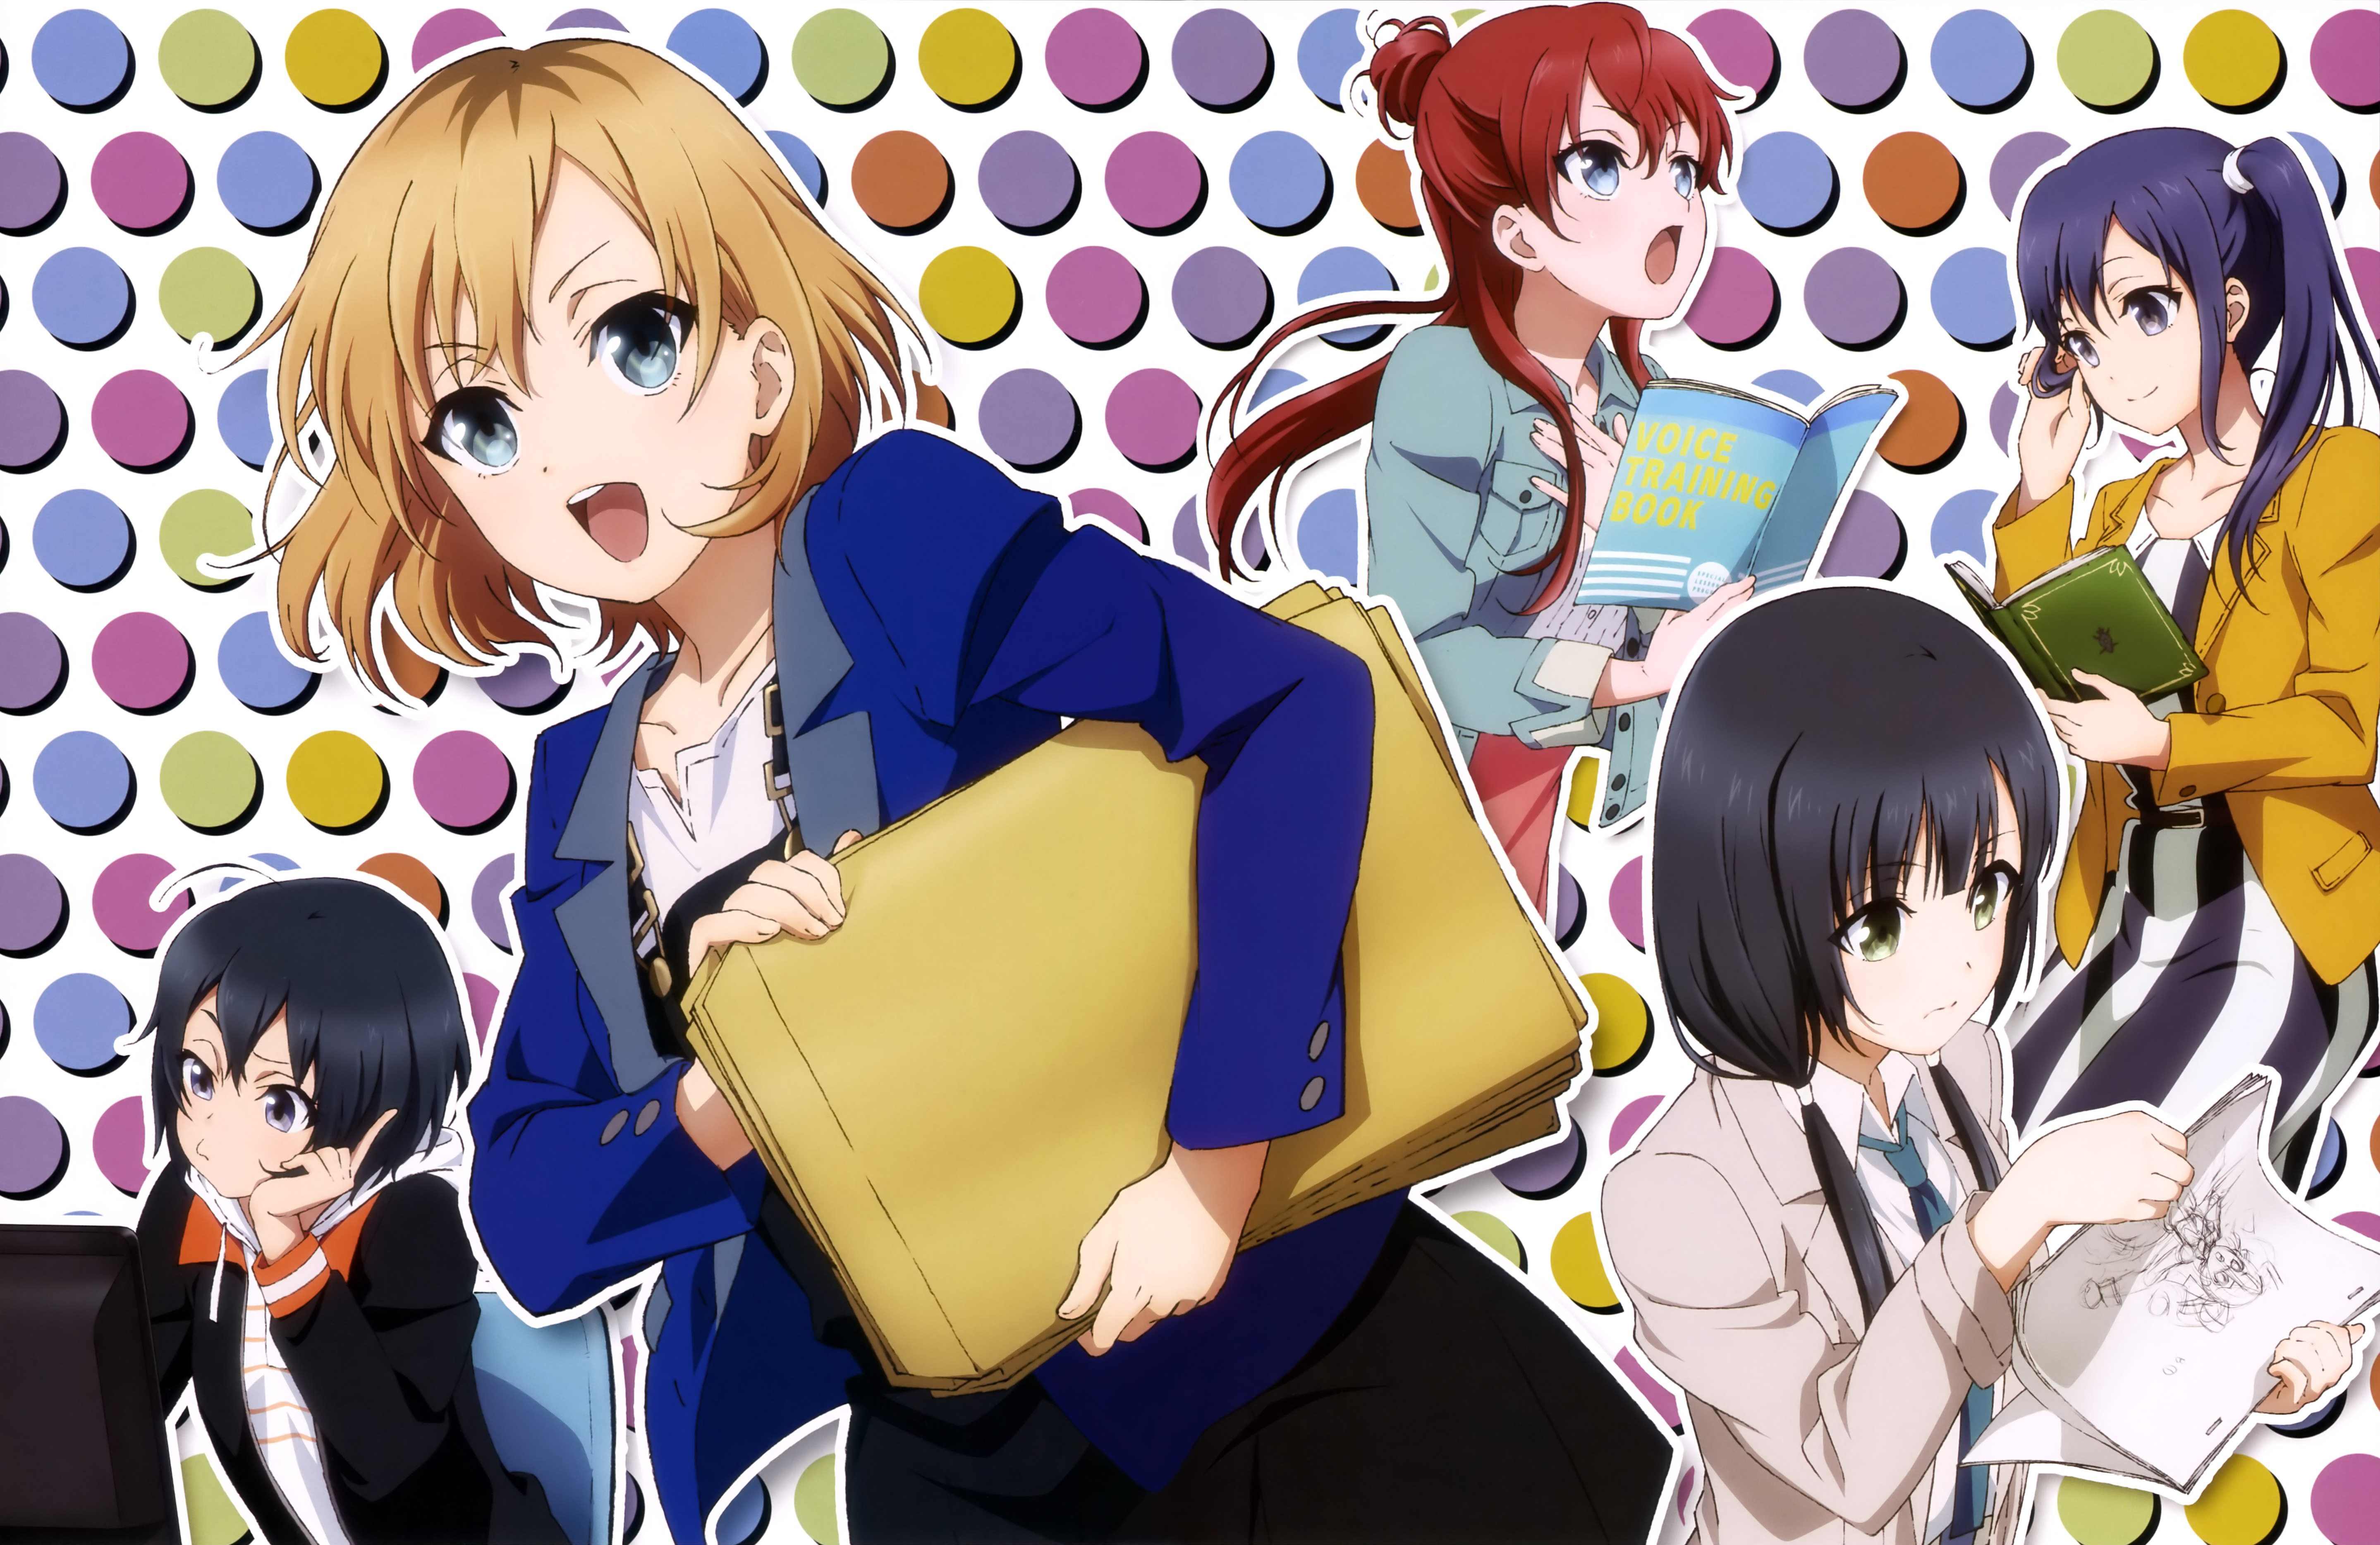 Anime Shirobako HD Wallpaper | Background Image